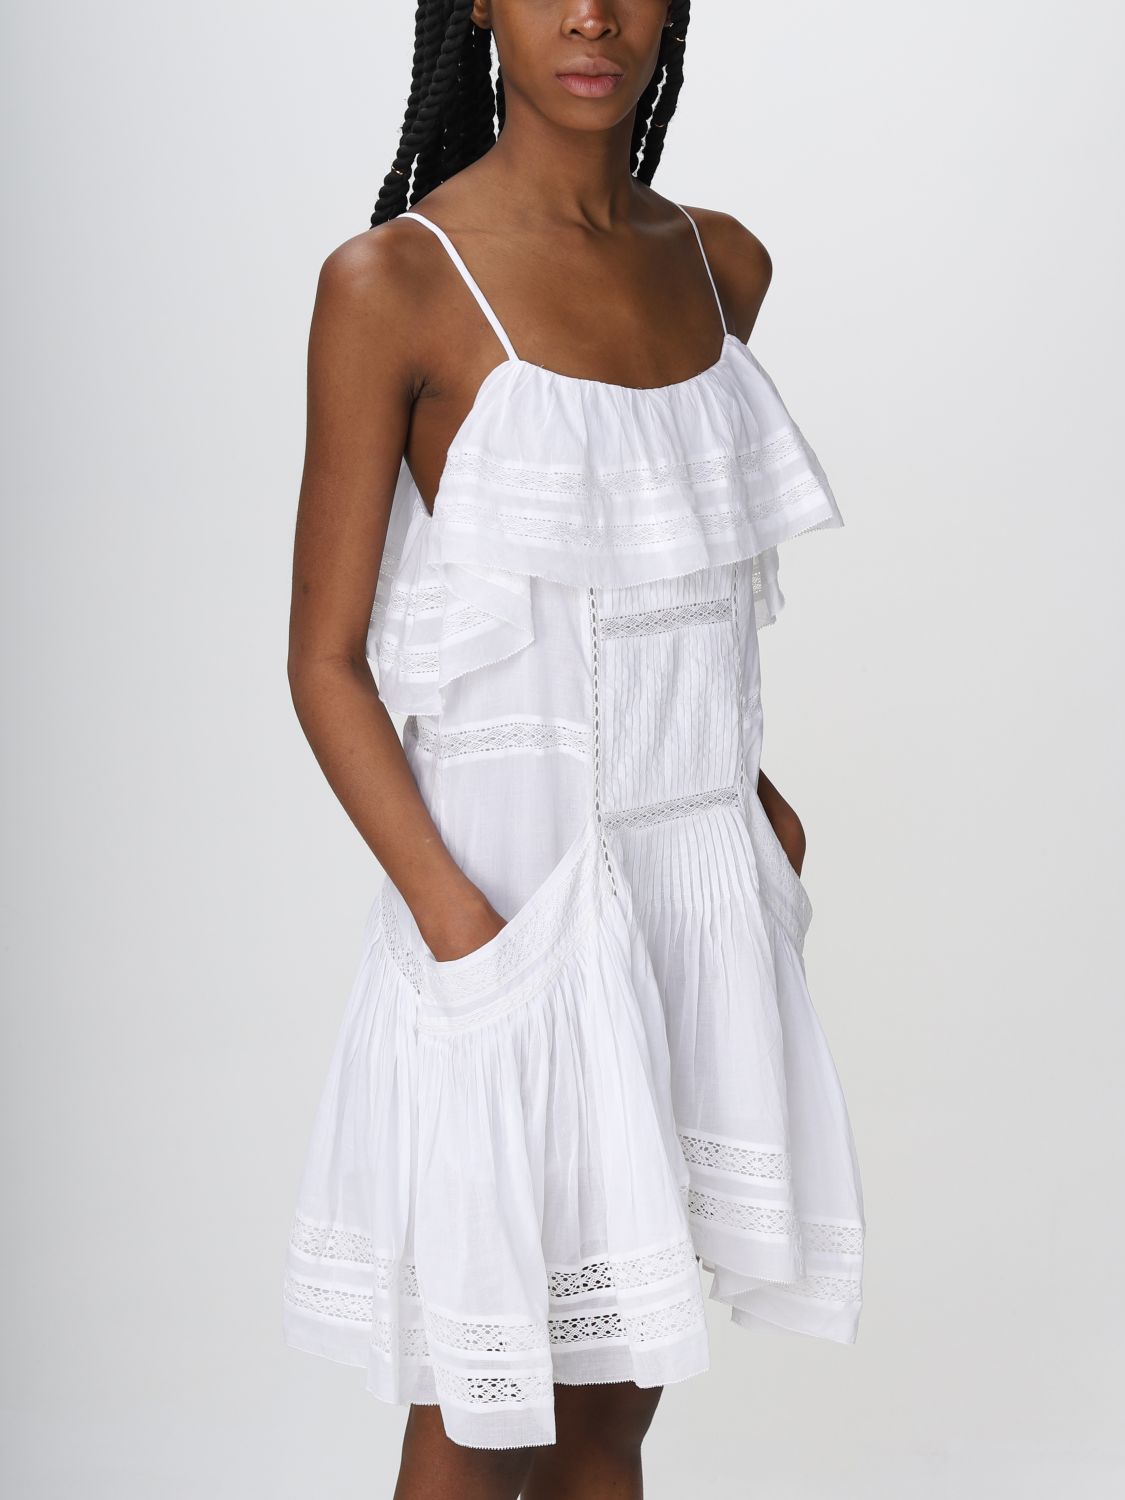 ISABEL MARANT ETOILE: dress for woman White | Isabel Marant Etoile dress RO0048FAA1J54E online at GIGLIO.COM